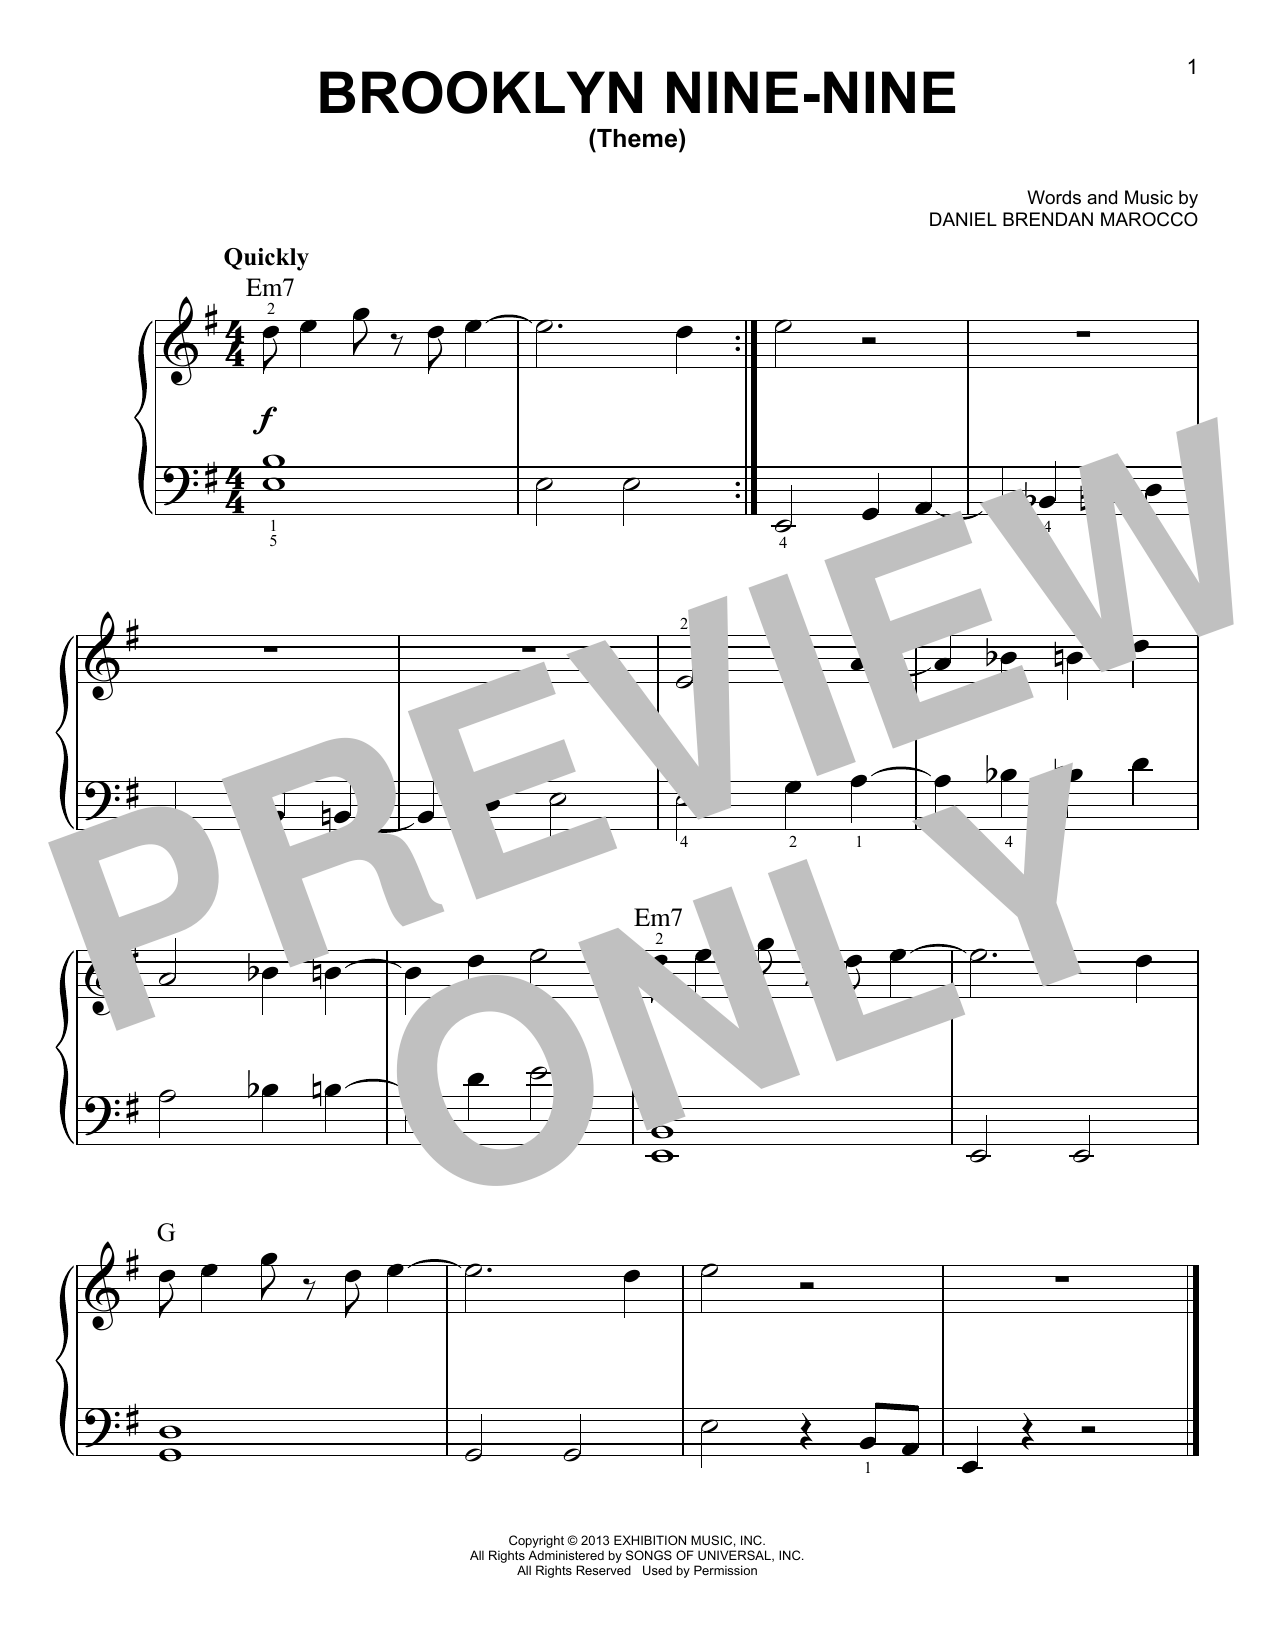 Download Daniel Brendan Marocco Brooklyn Nine-Nine (Theme) Sheet Music and learn how to play Very Easy Piano PDF digital score in minutes